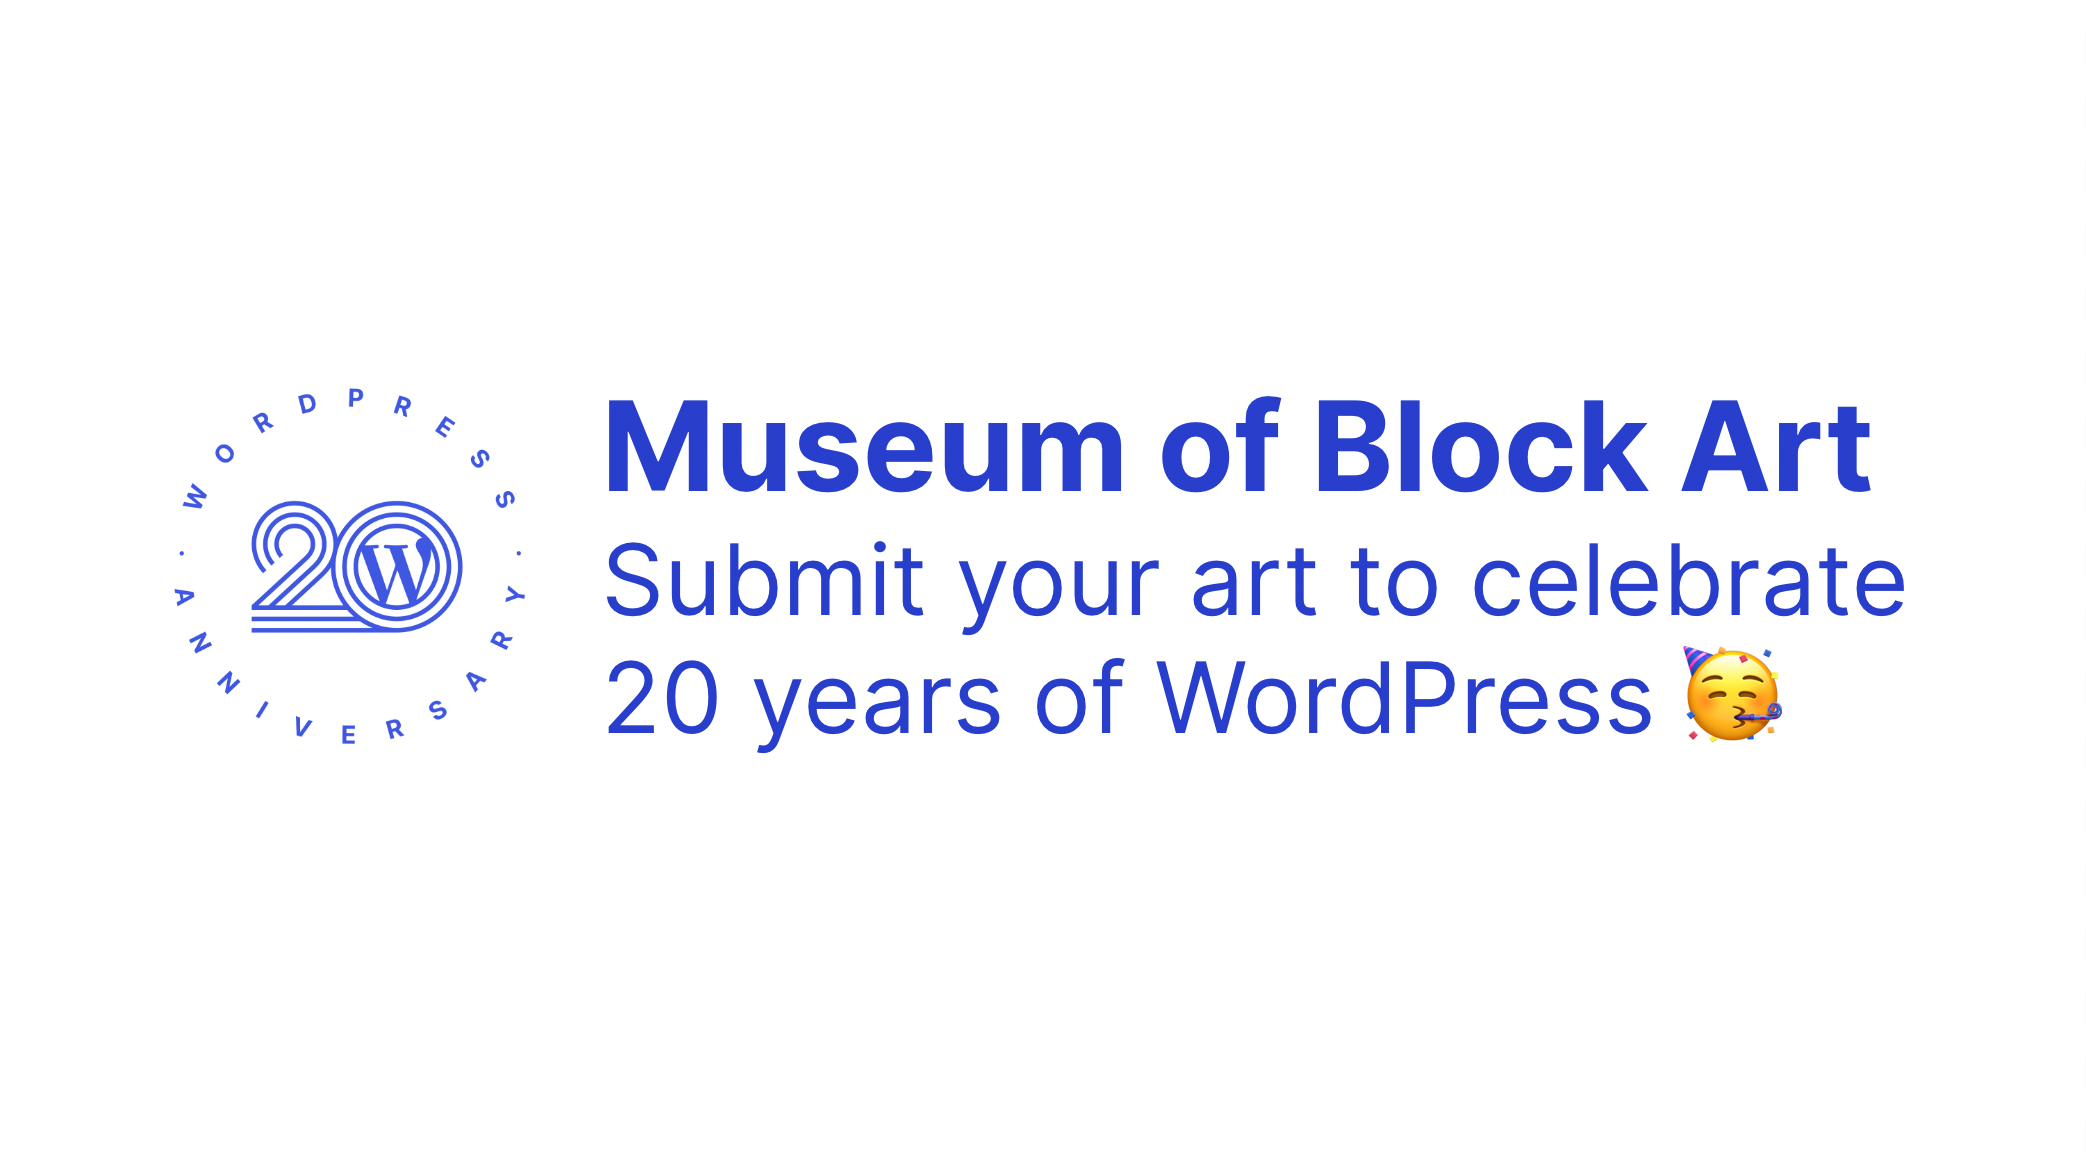 Let’s celebrate 20 years of WordPress